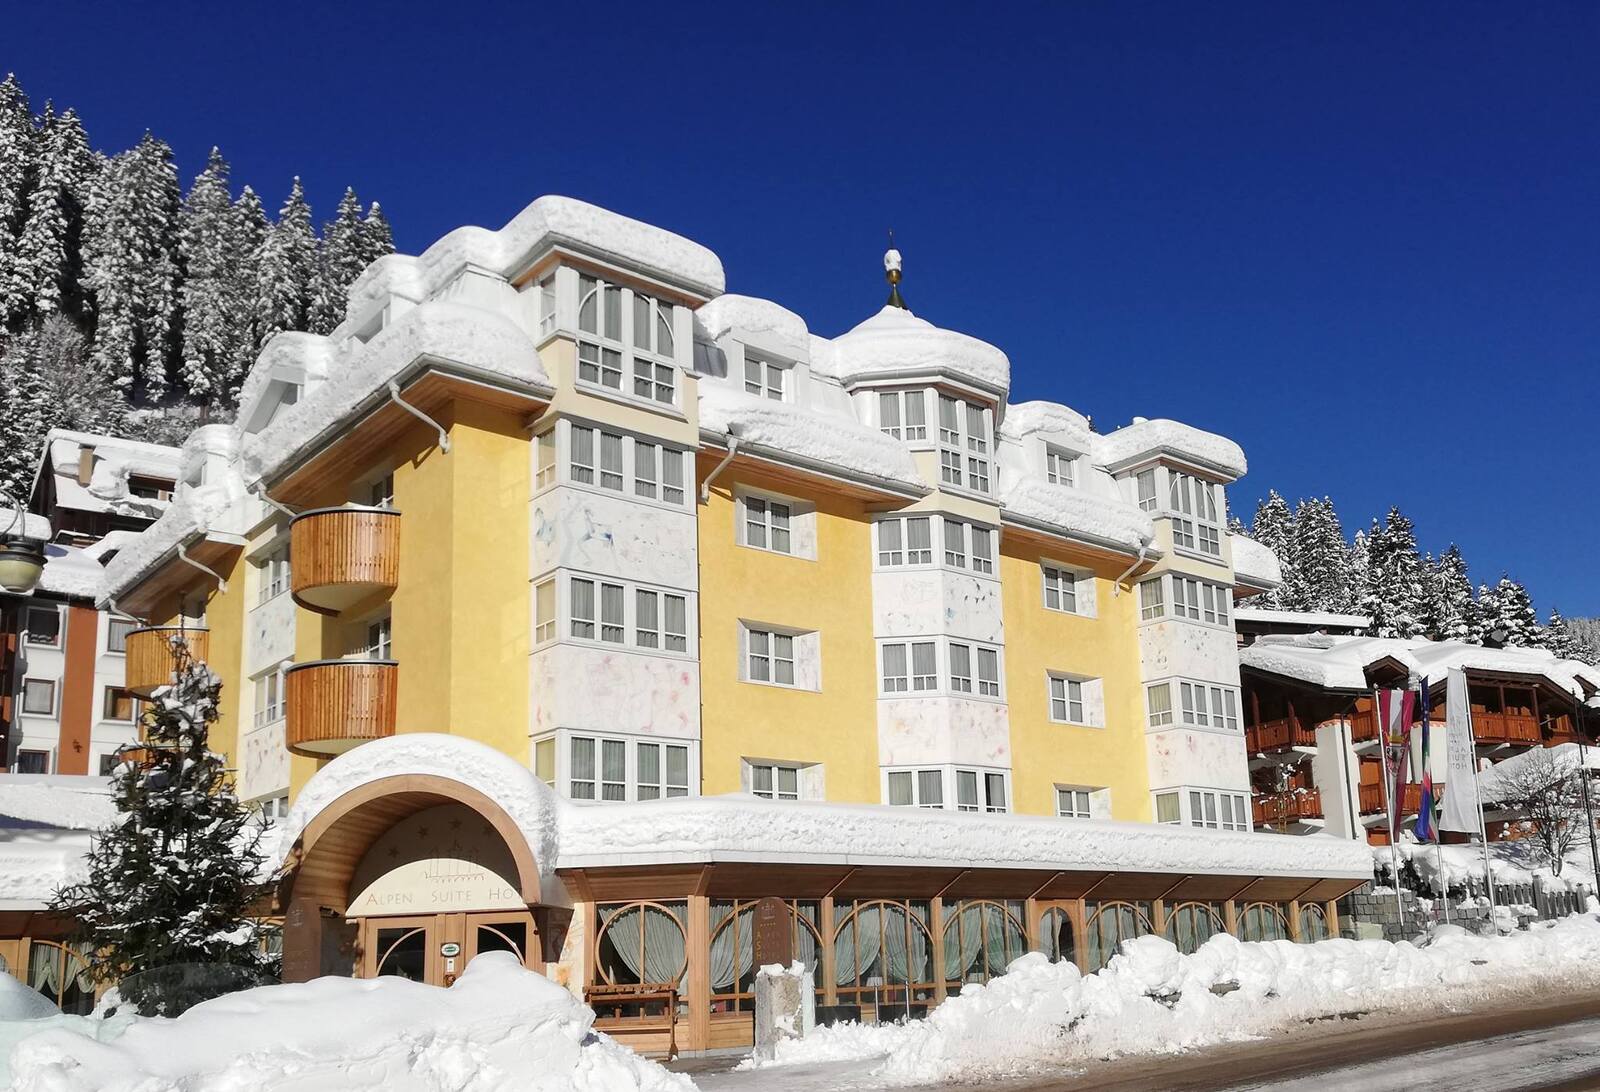 Alpen Suite Hotel - Madonna di Campiglio